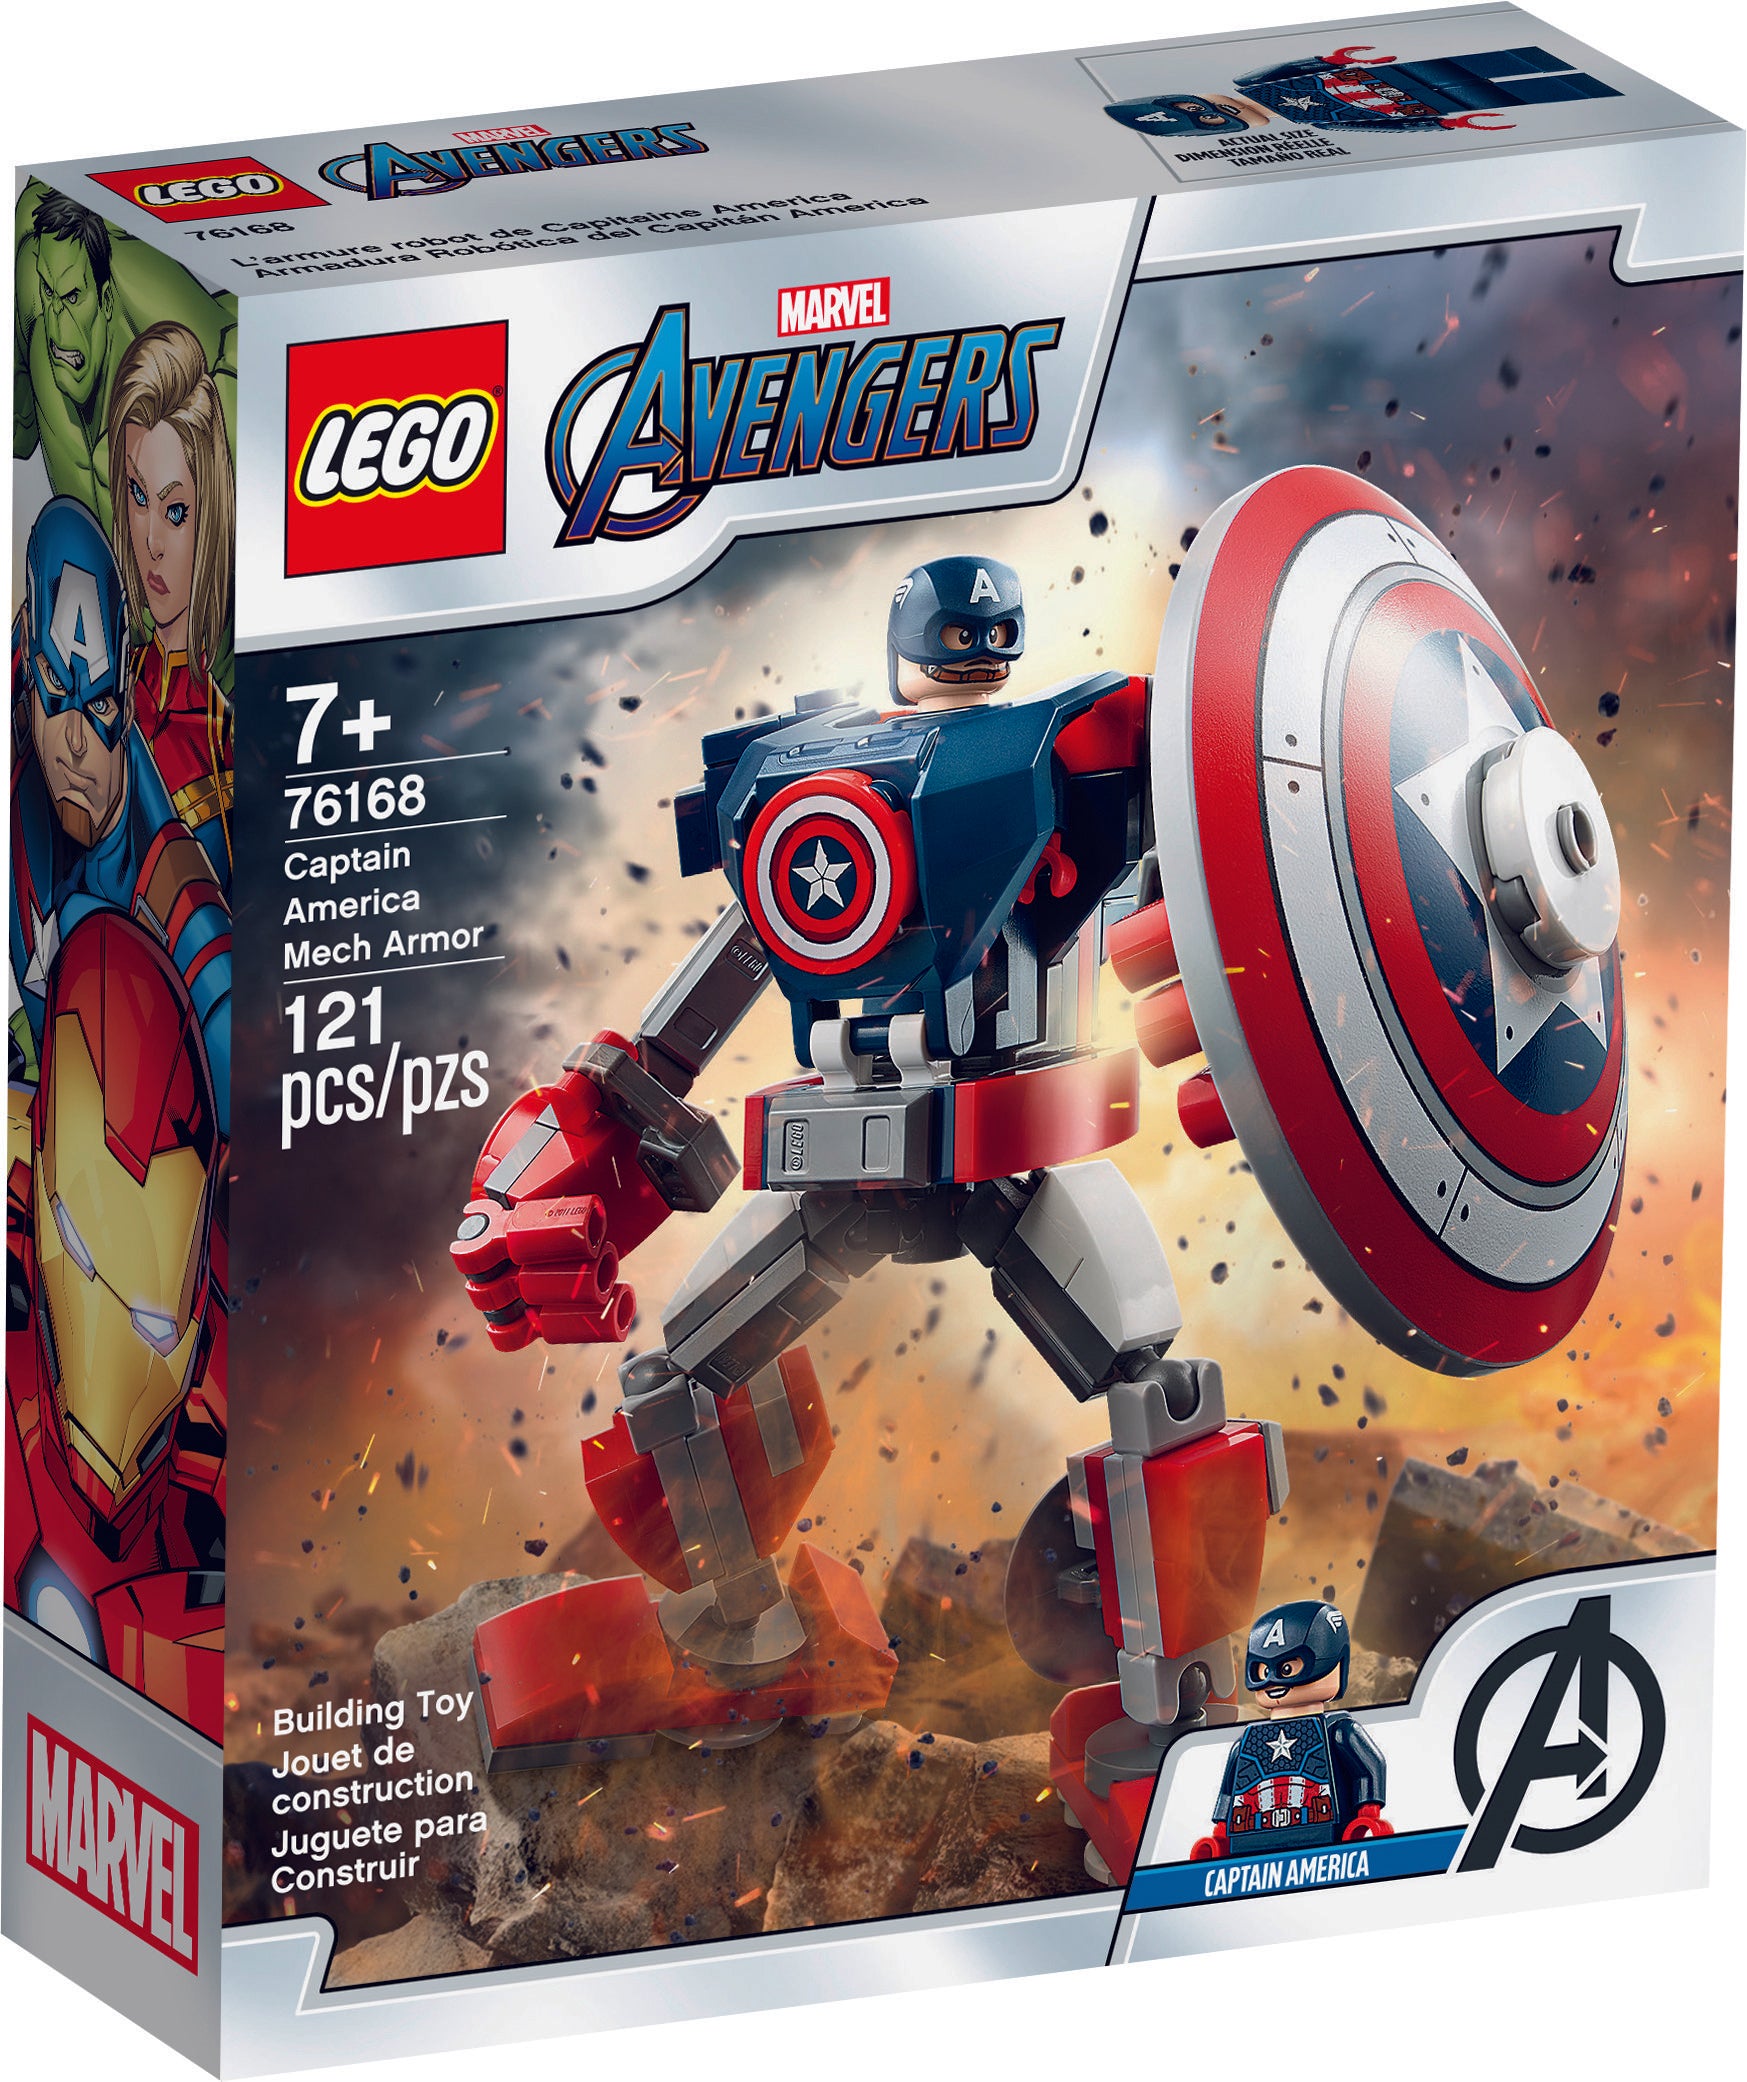 LEGO: Super Heroes - Captain America Mech Armor